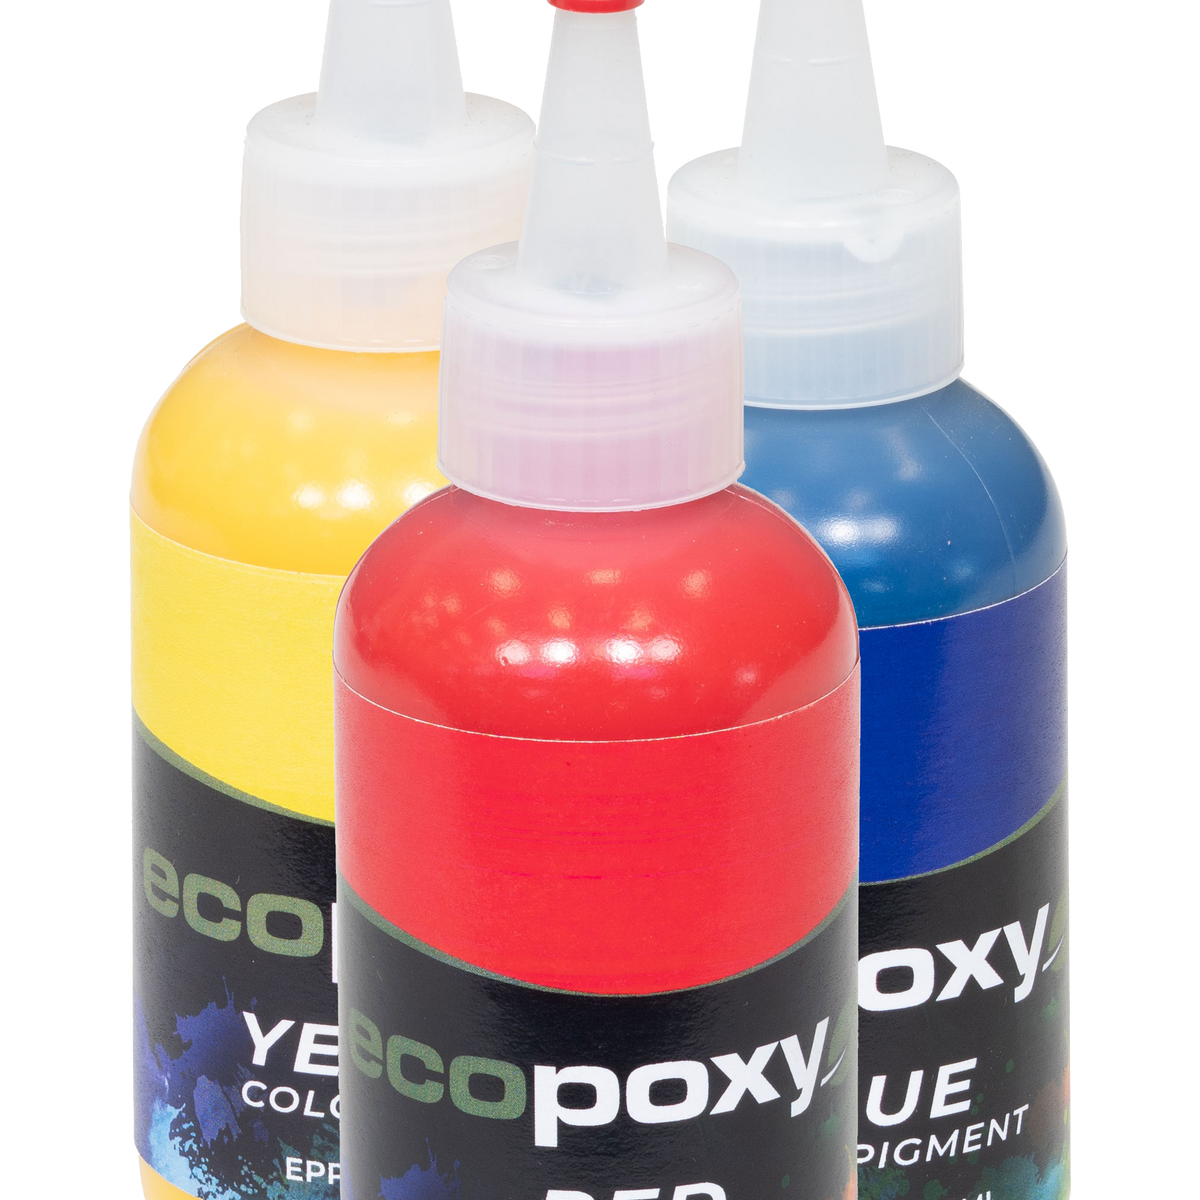 Ecopoxy Metallic Color Pigment Single Color 15g 